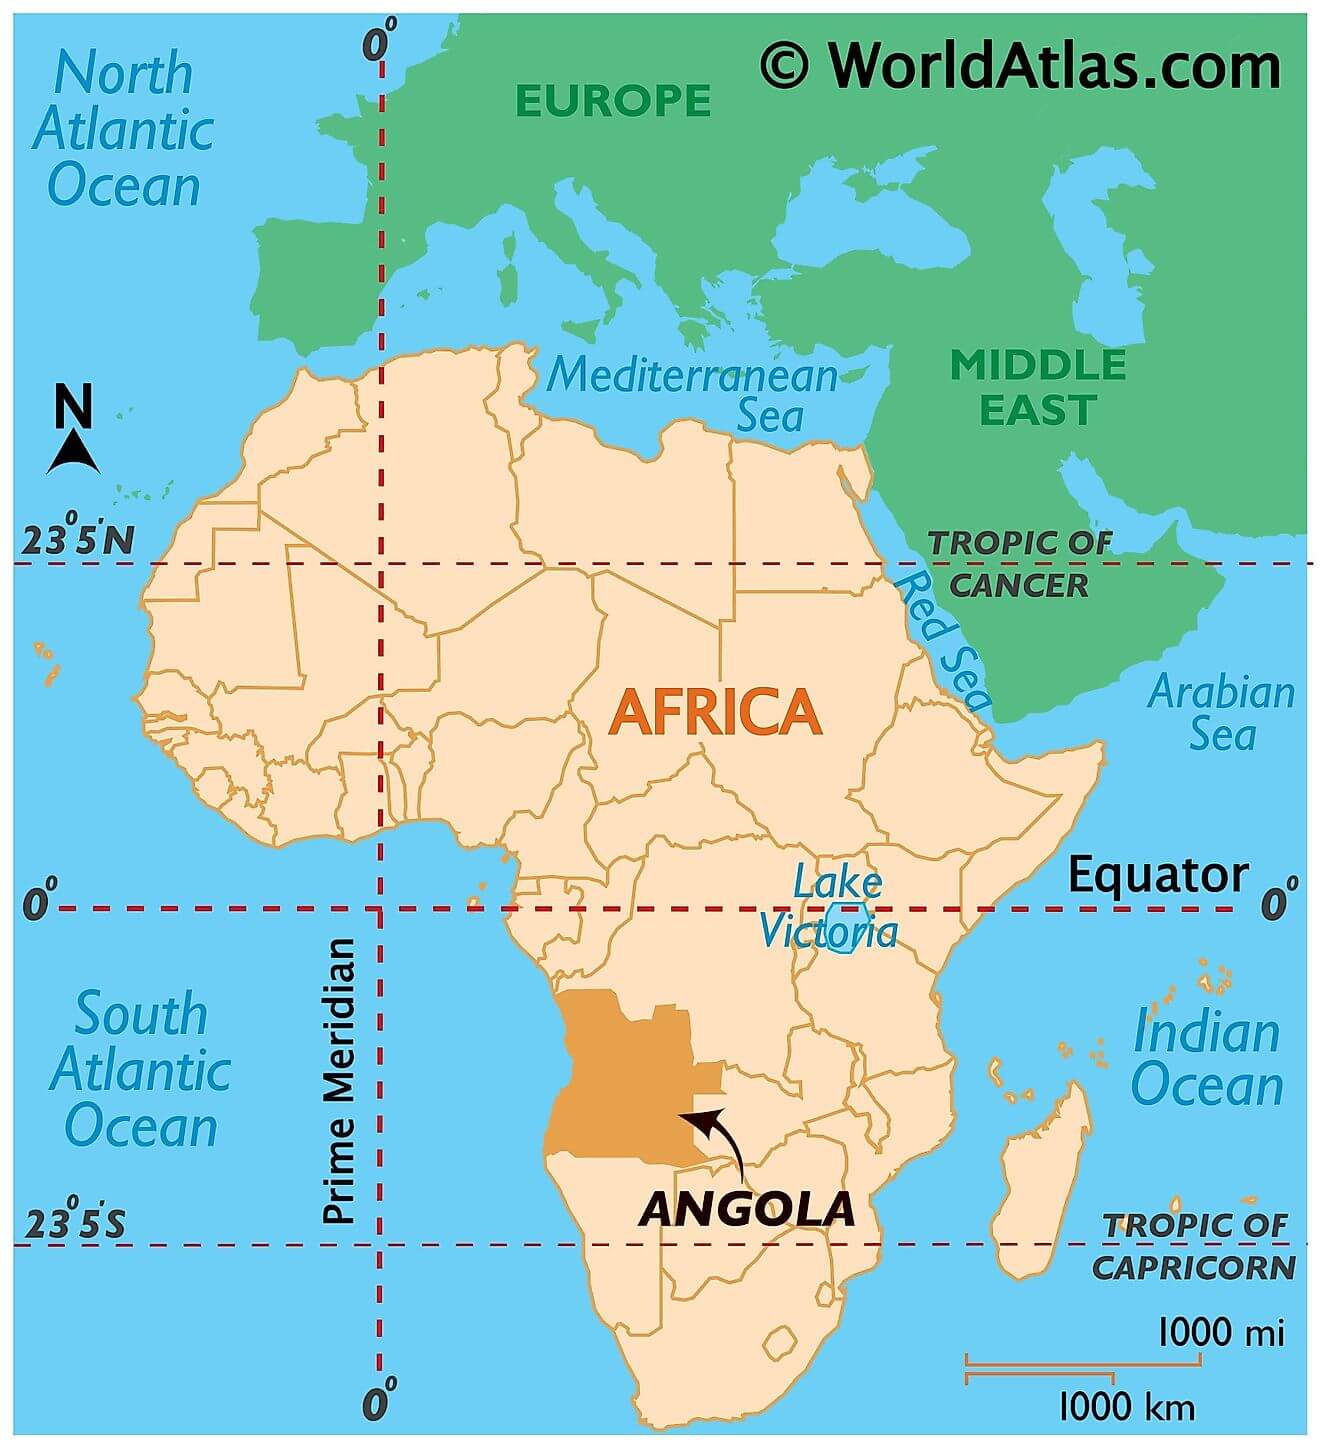 Where is Angola?